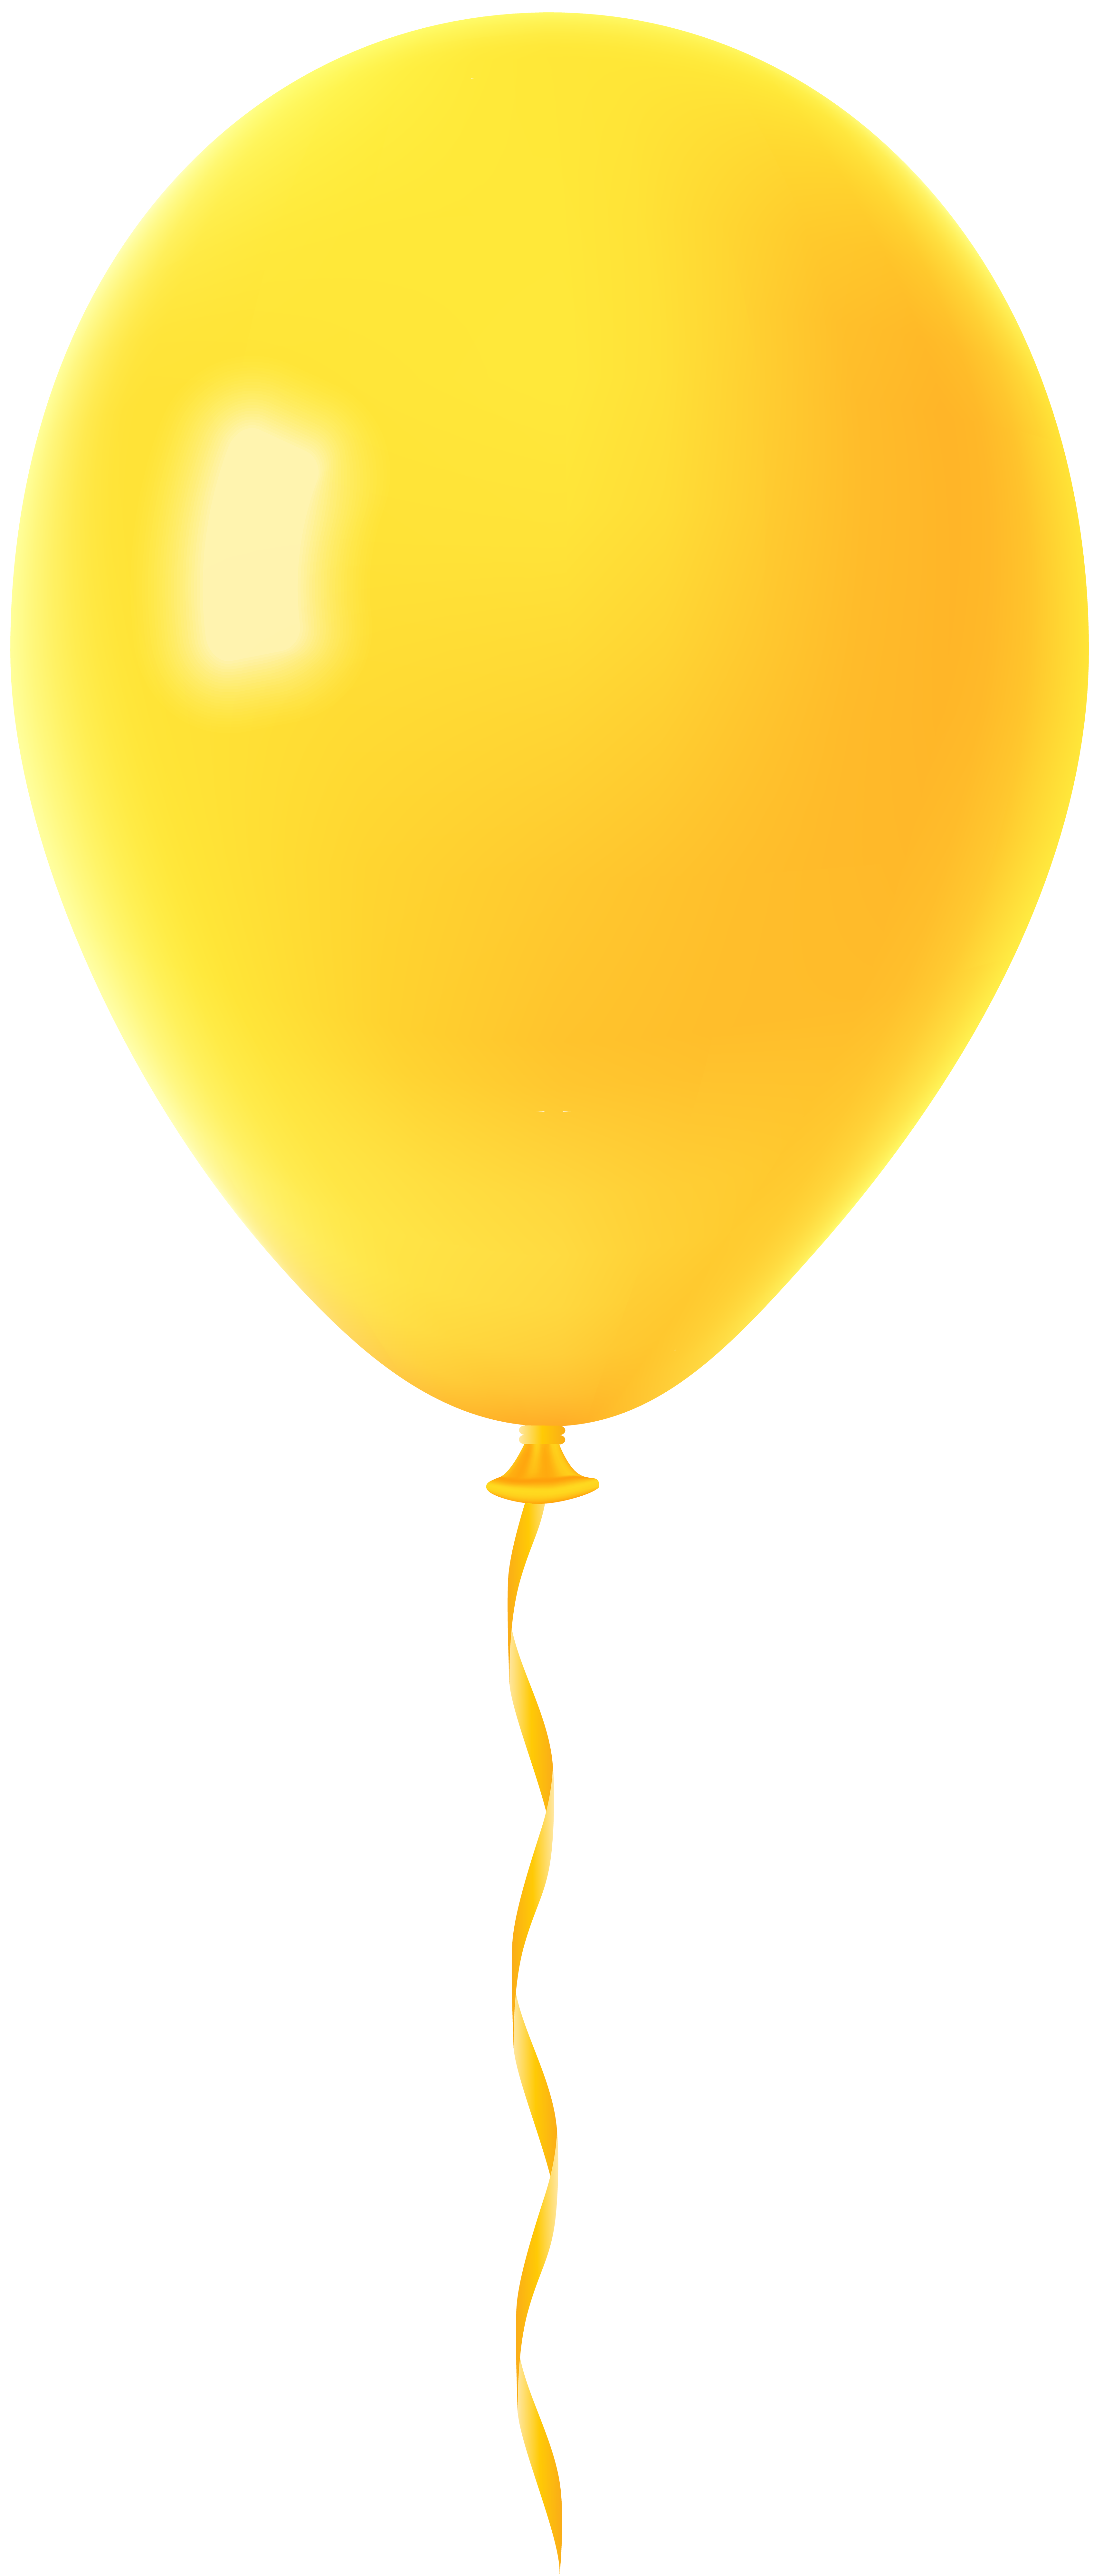 Yellow Balloon Transparent PNG Clip Art Image.